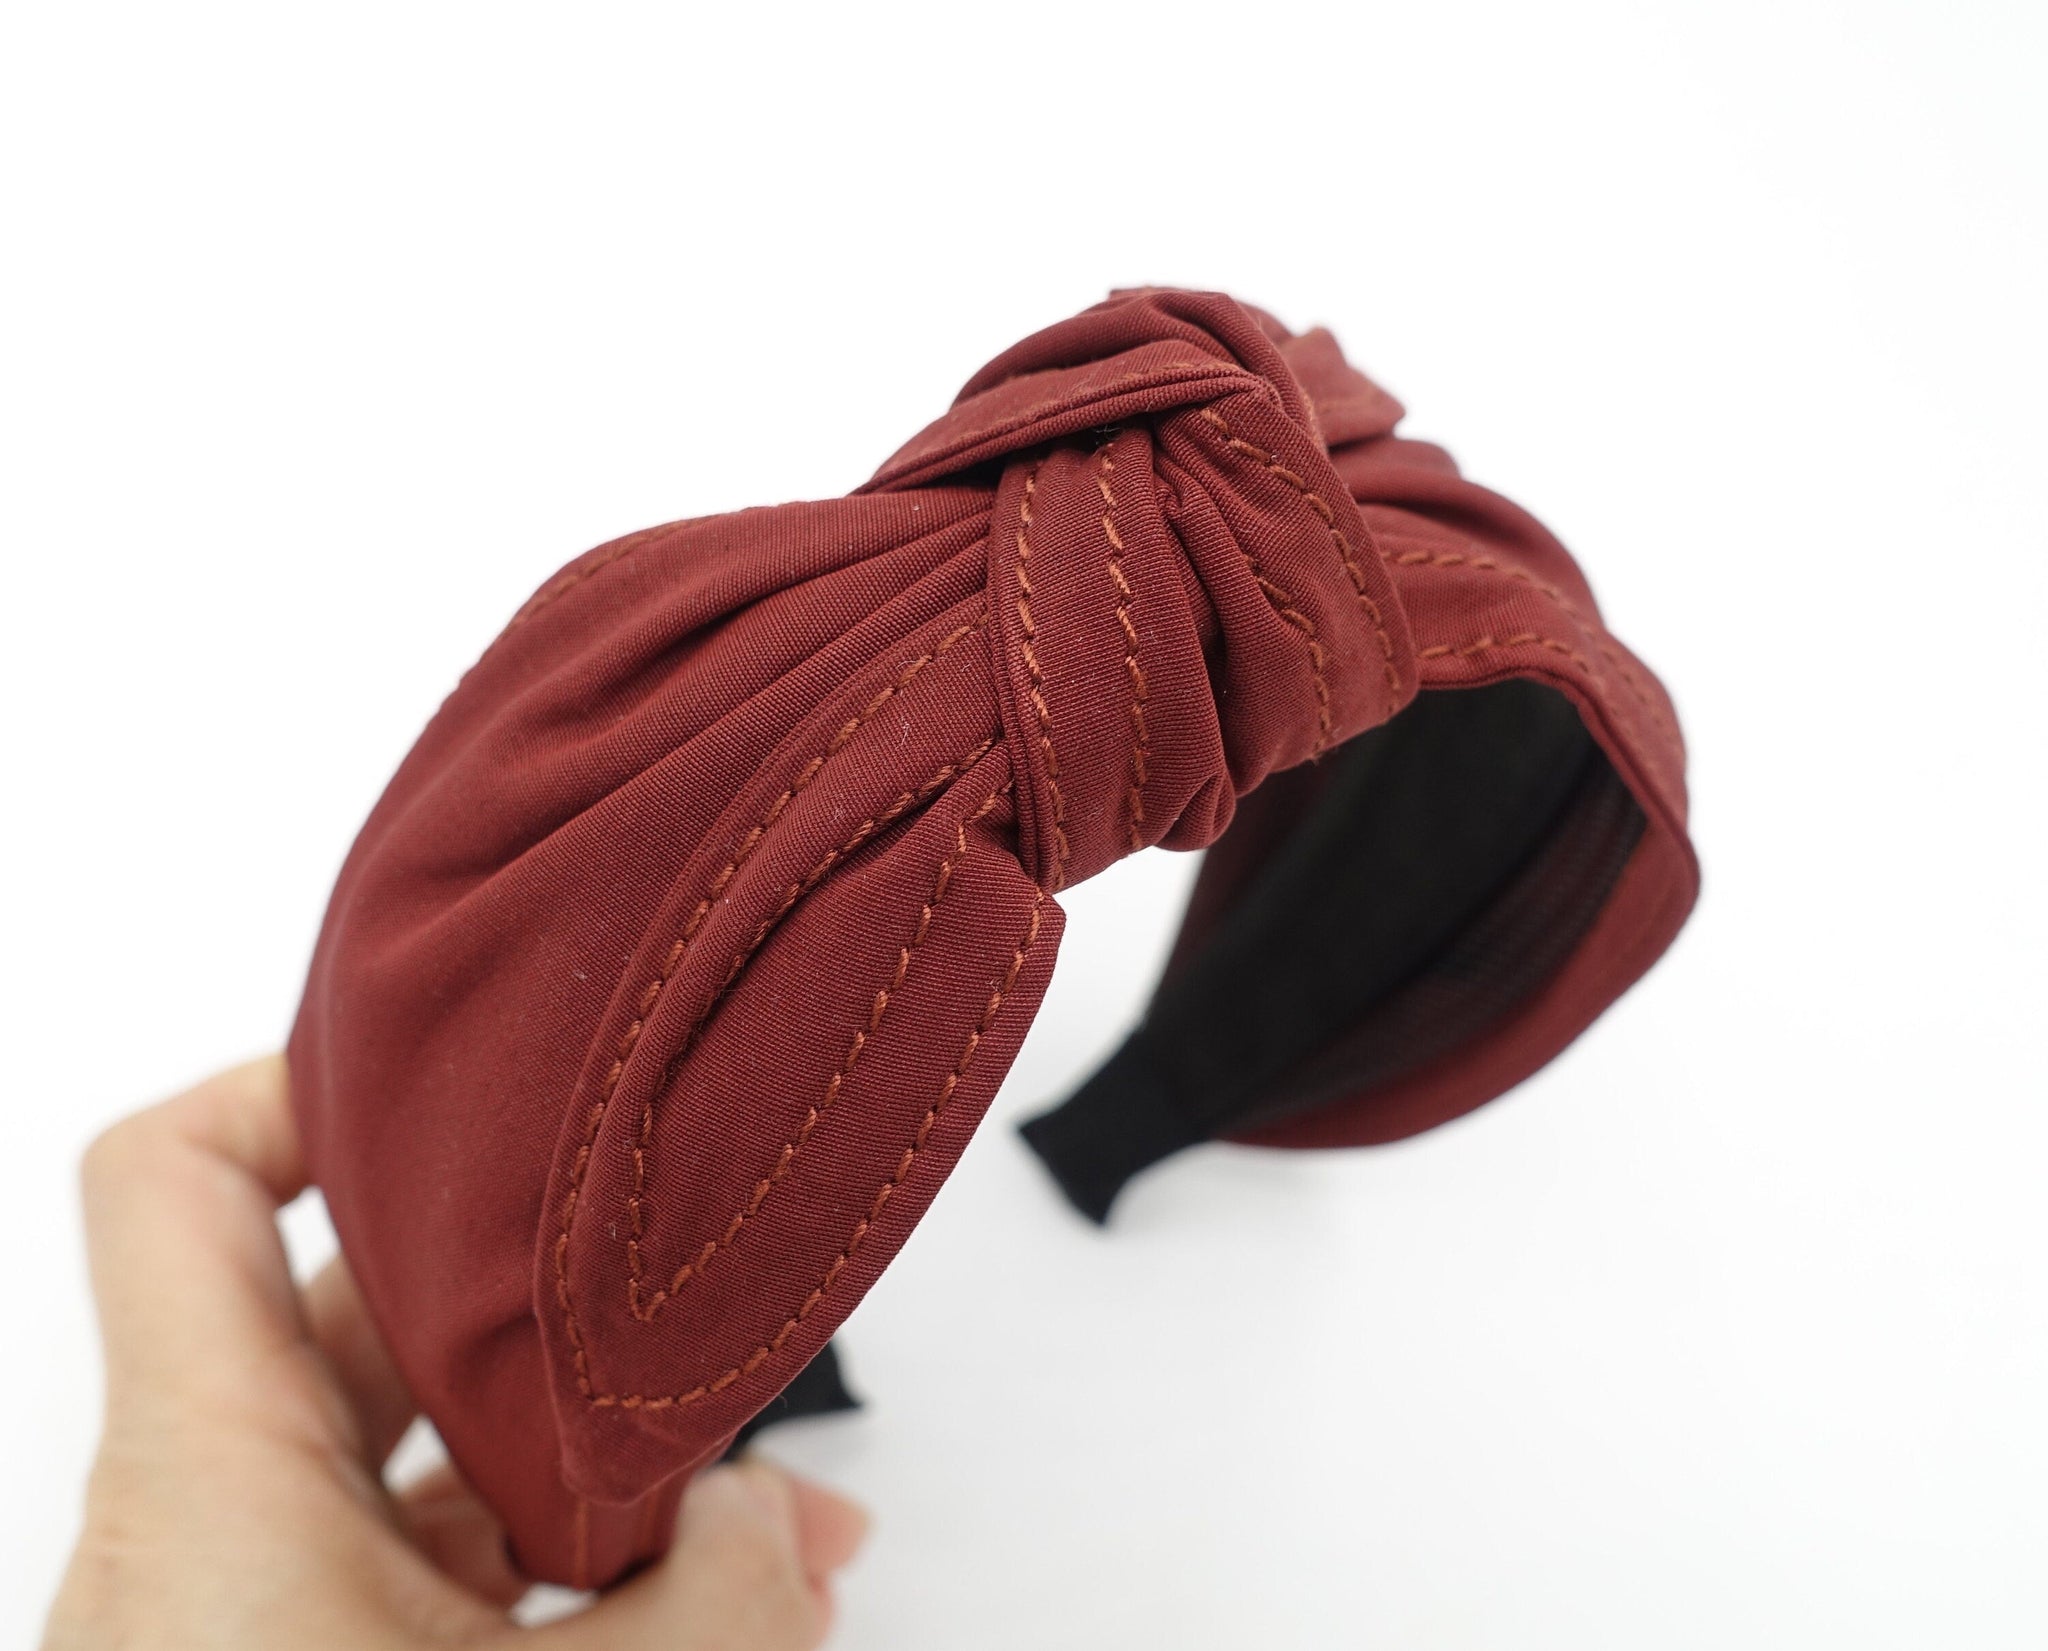 veryshine.com Headband Red wine stitched top knot headband casual hairband Fall hair accessory for women